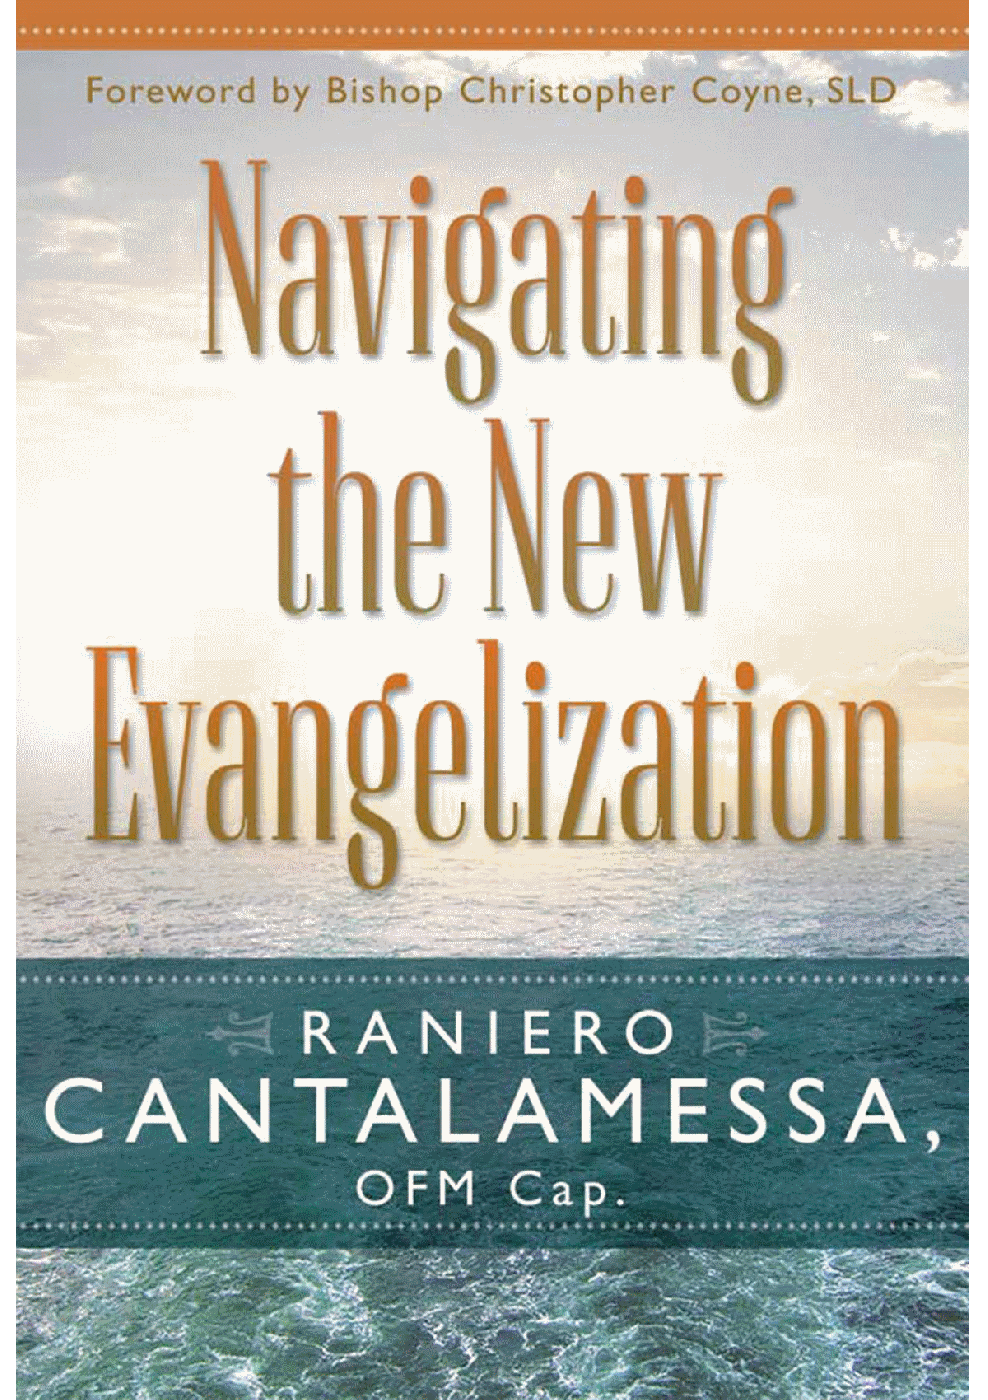 Navigating the New Evangelization